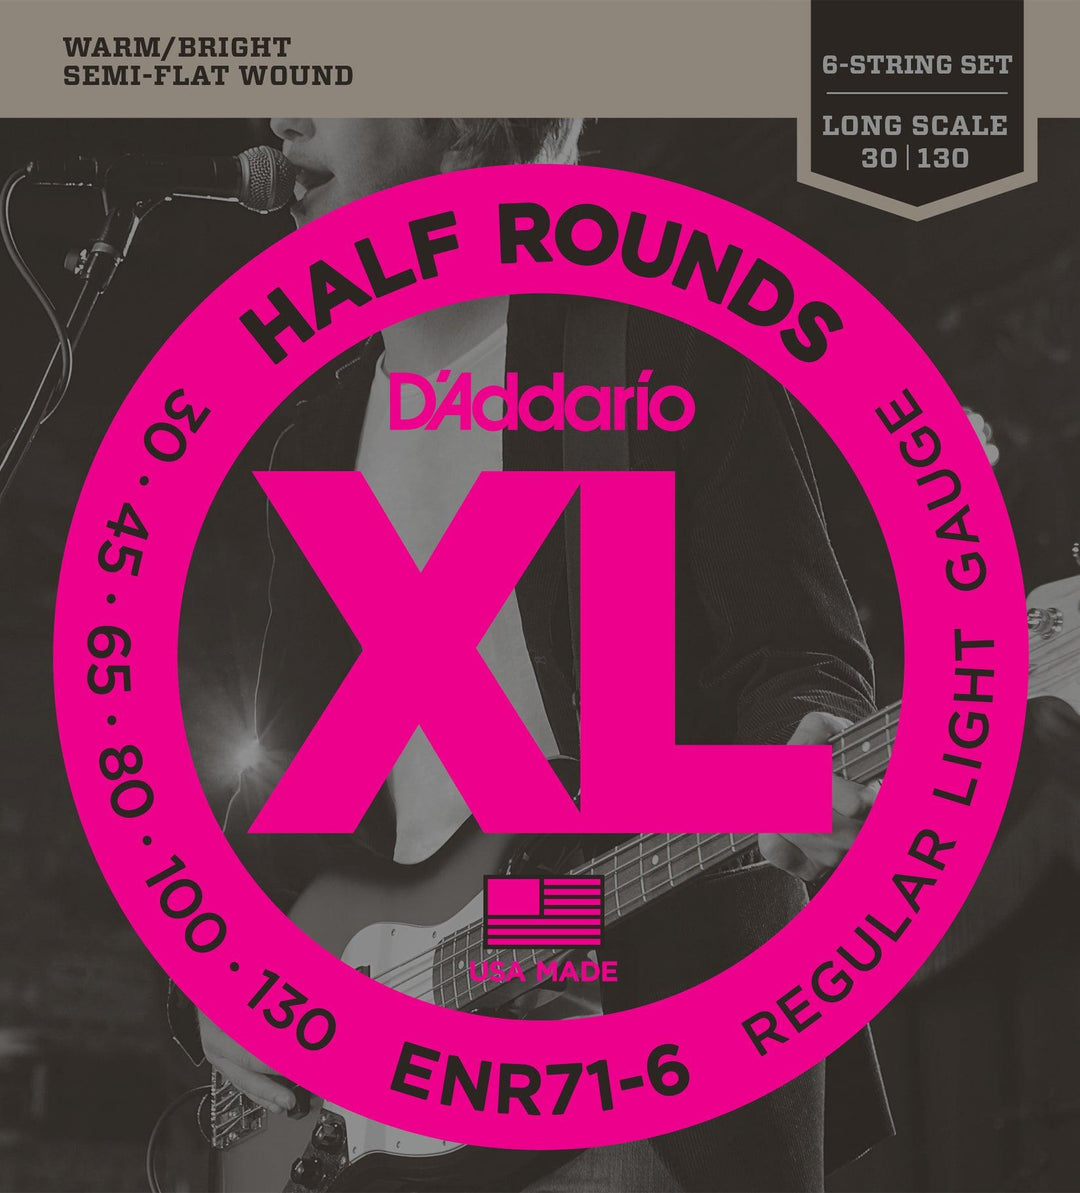 D'Addario XL Half Round 6-String Bass Guitar Set, ENR71-6 Regular Light .030-.130 Long Scale - A Strings